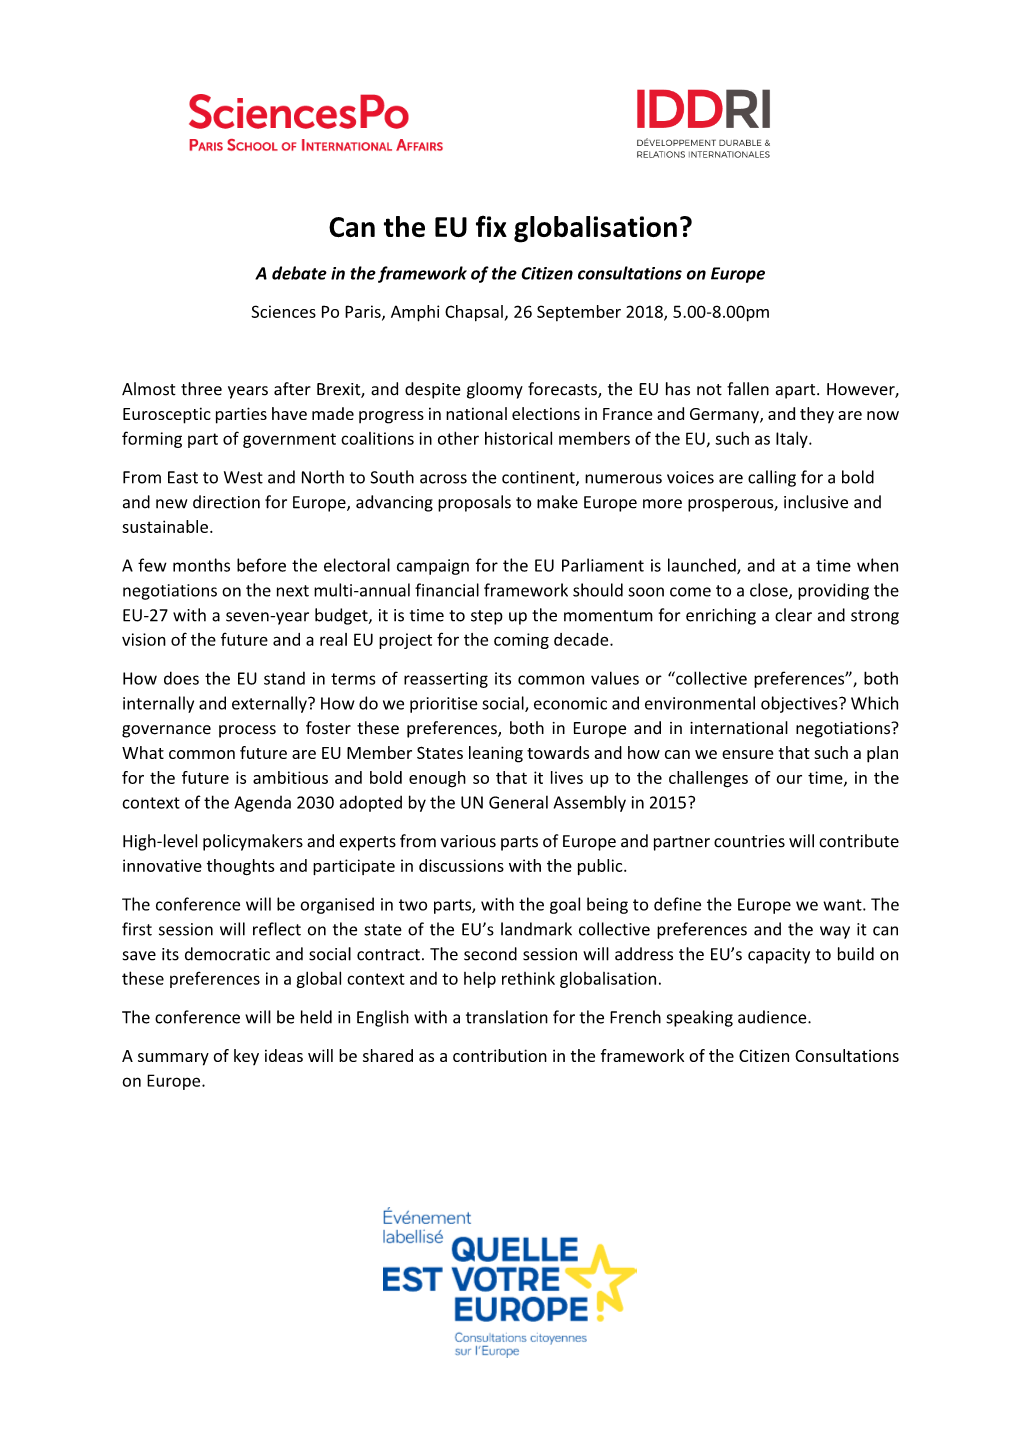 Can the EU Fix Globalisation?